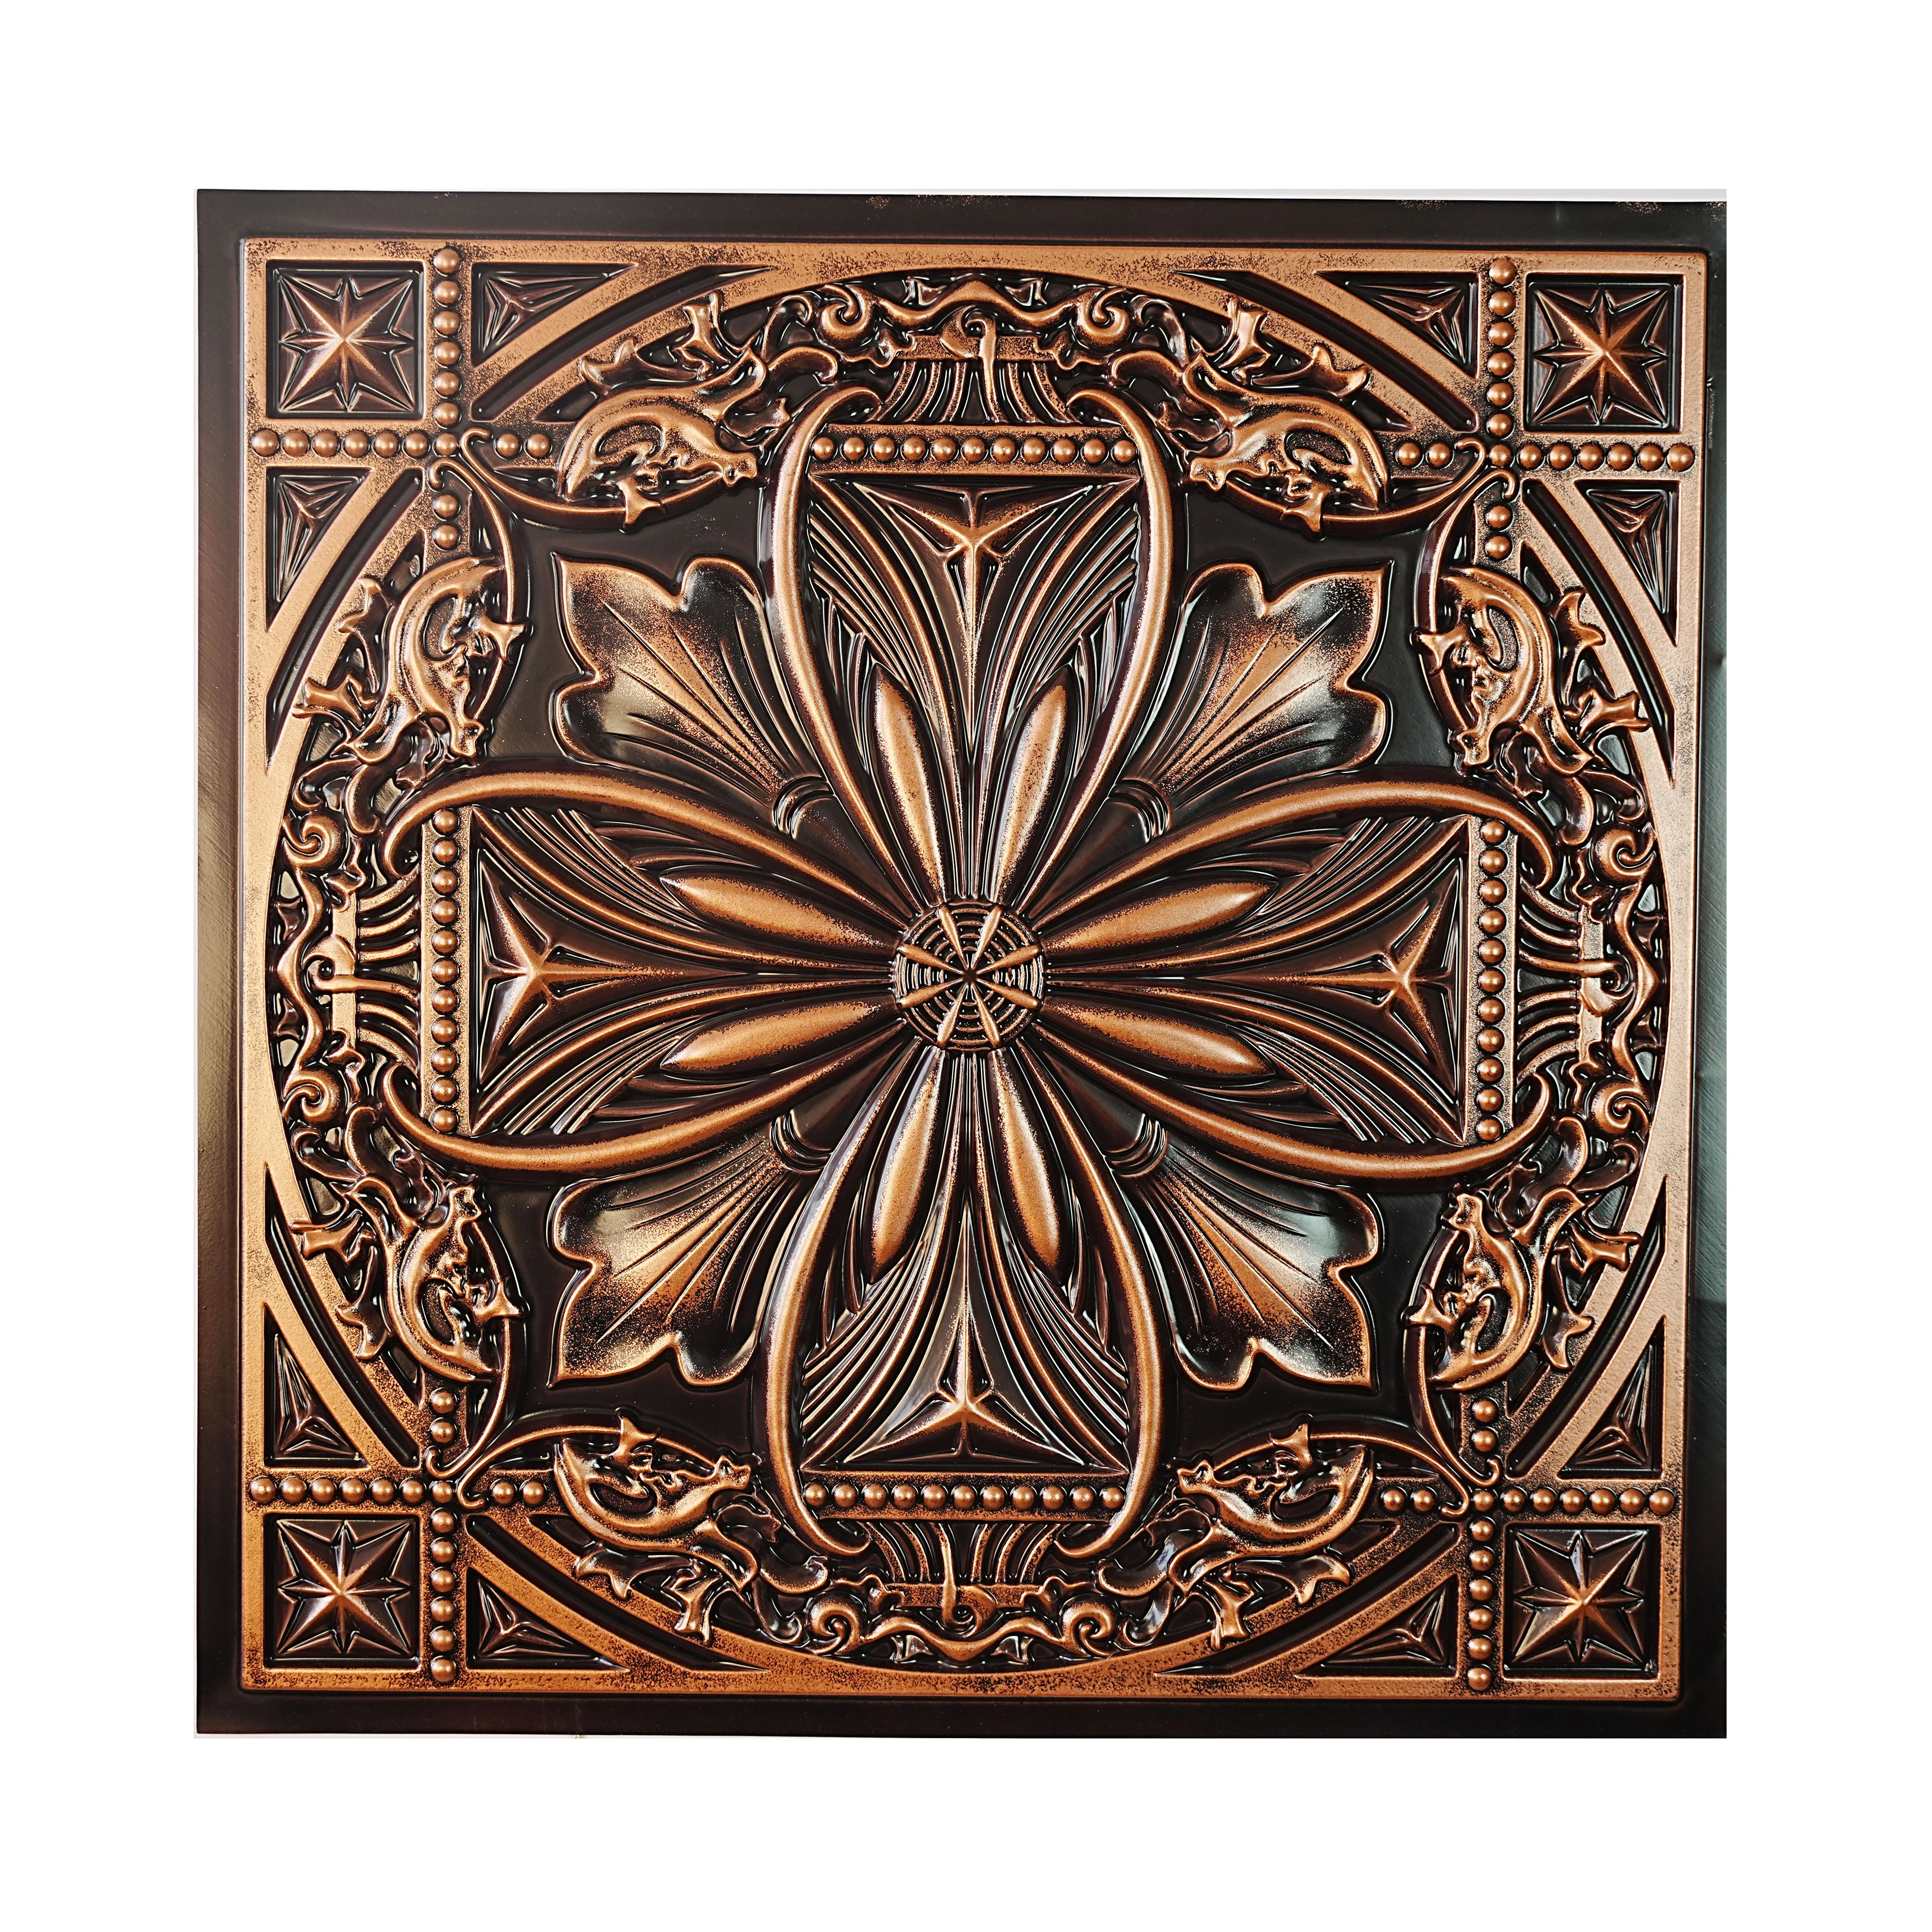 3D Embossed Wall Panels PVC Faux Tin Painting Tile Artistic 3D Ceiling Tile for Cafe Club PL10 Traditional copper PAINTSDECOR